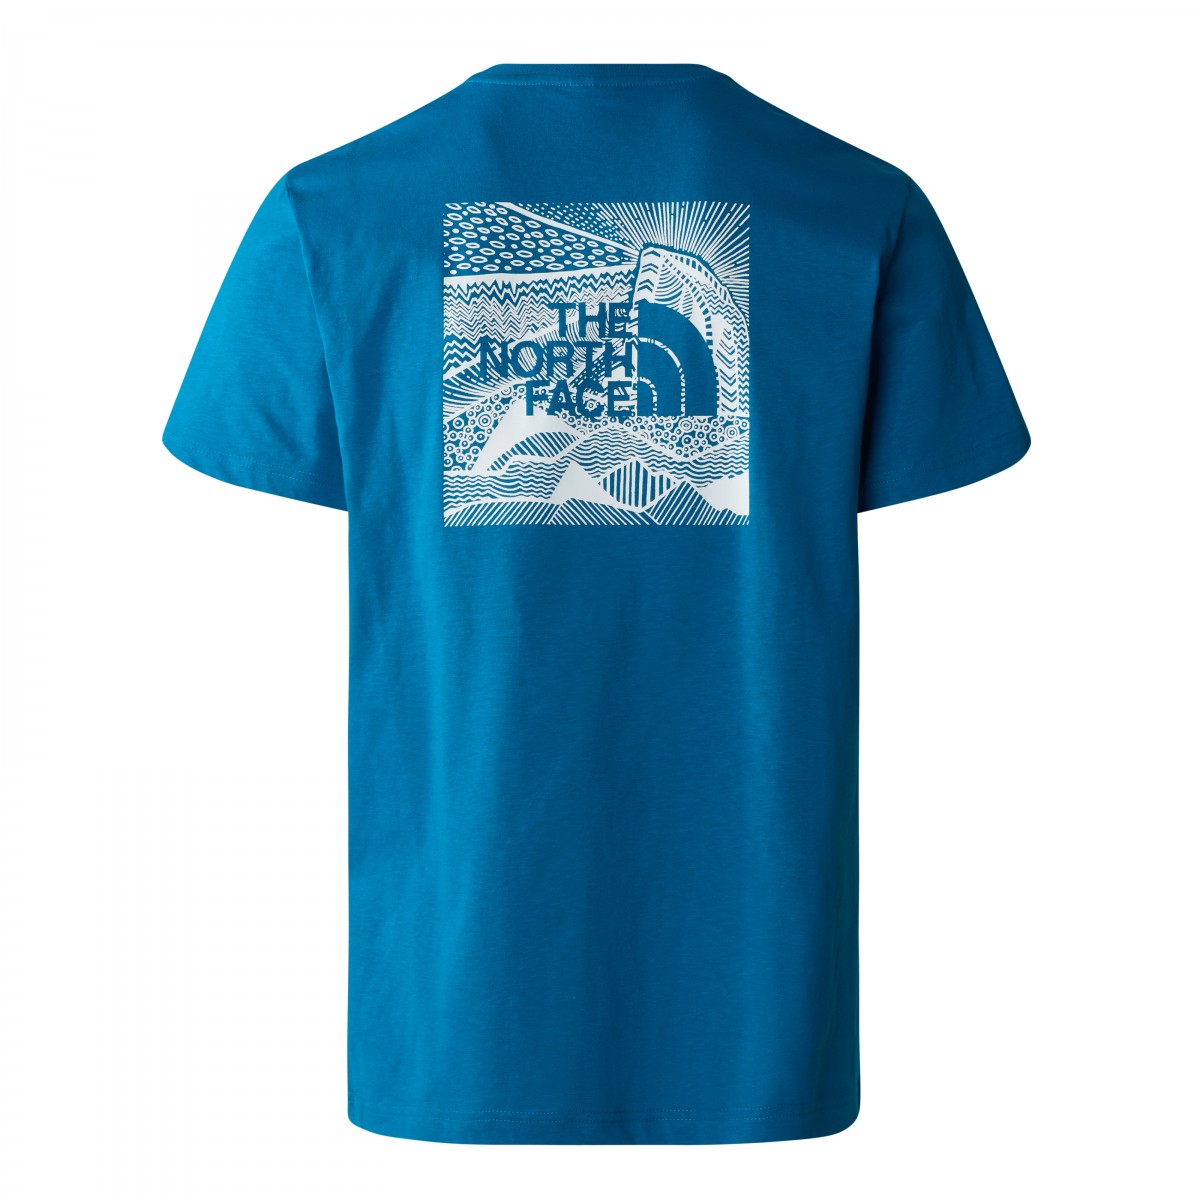 THE NORTH FACE - T-shirt bleu imprimé